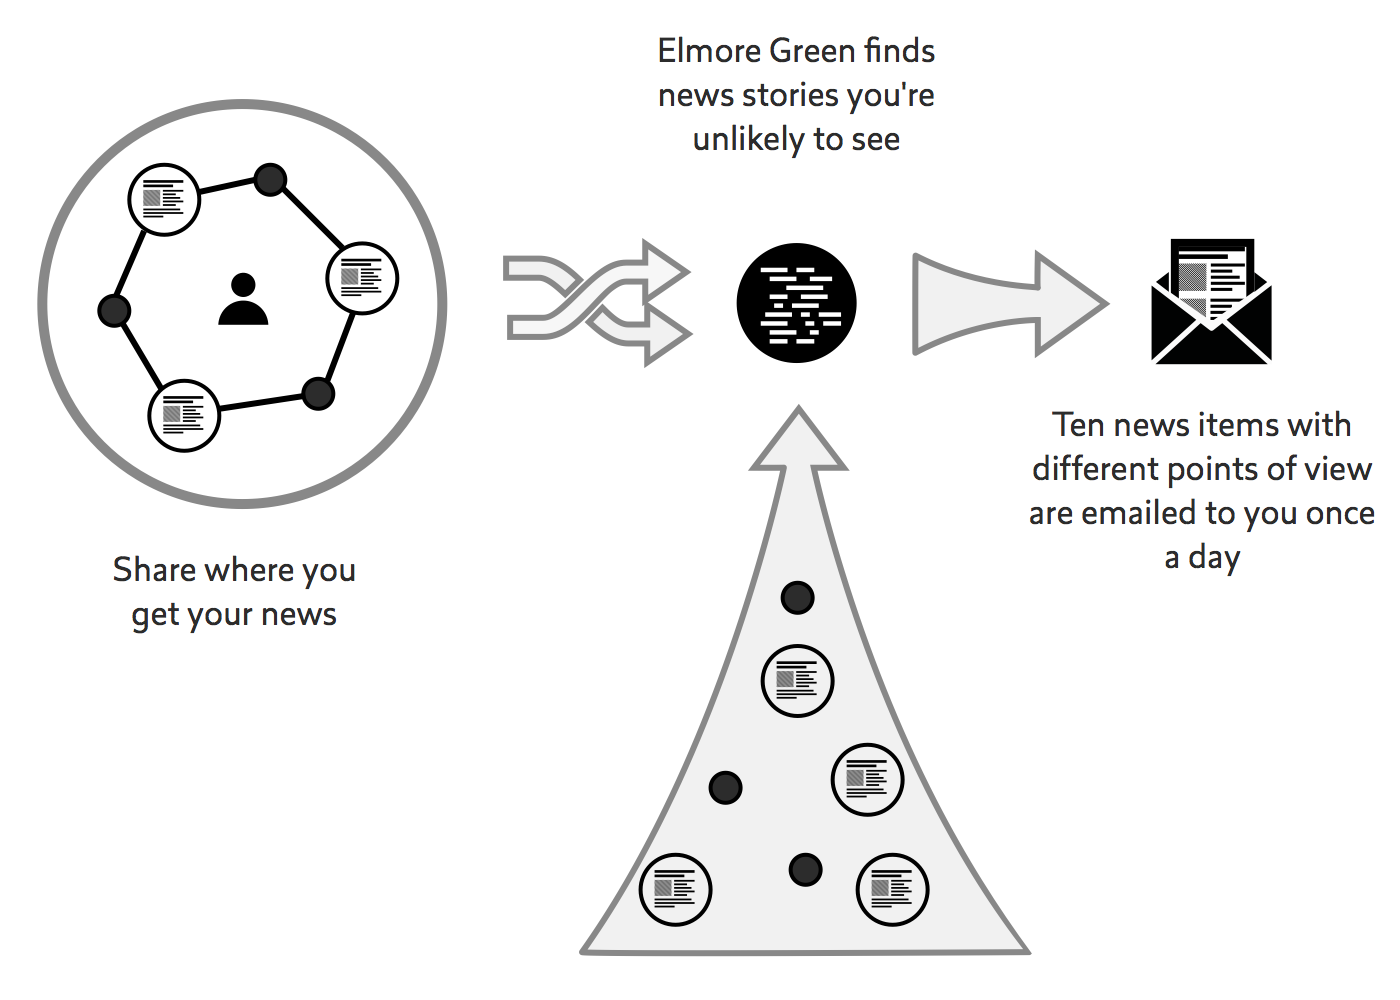 How Elmore Green works